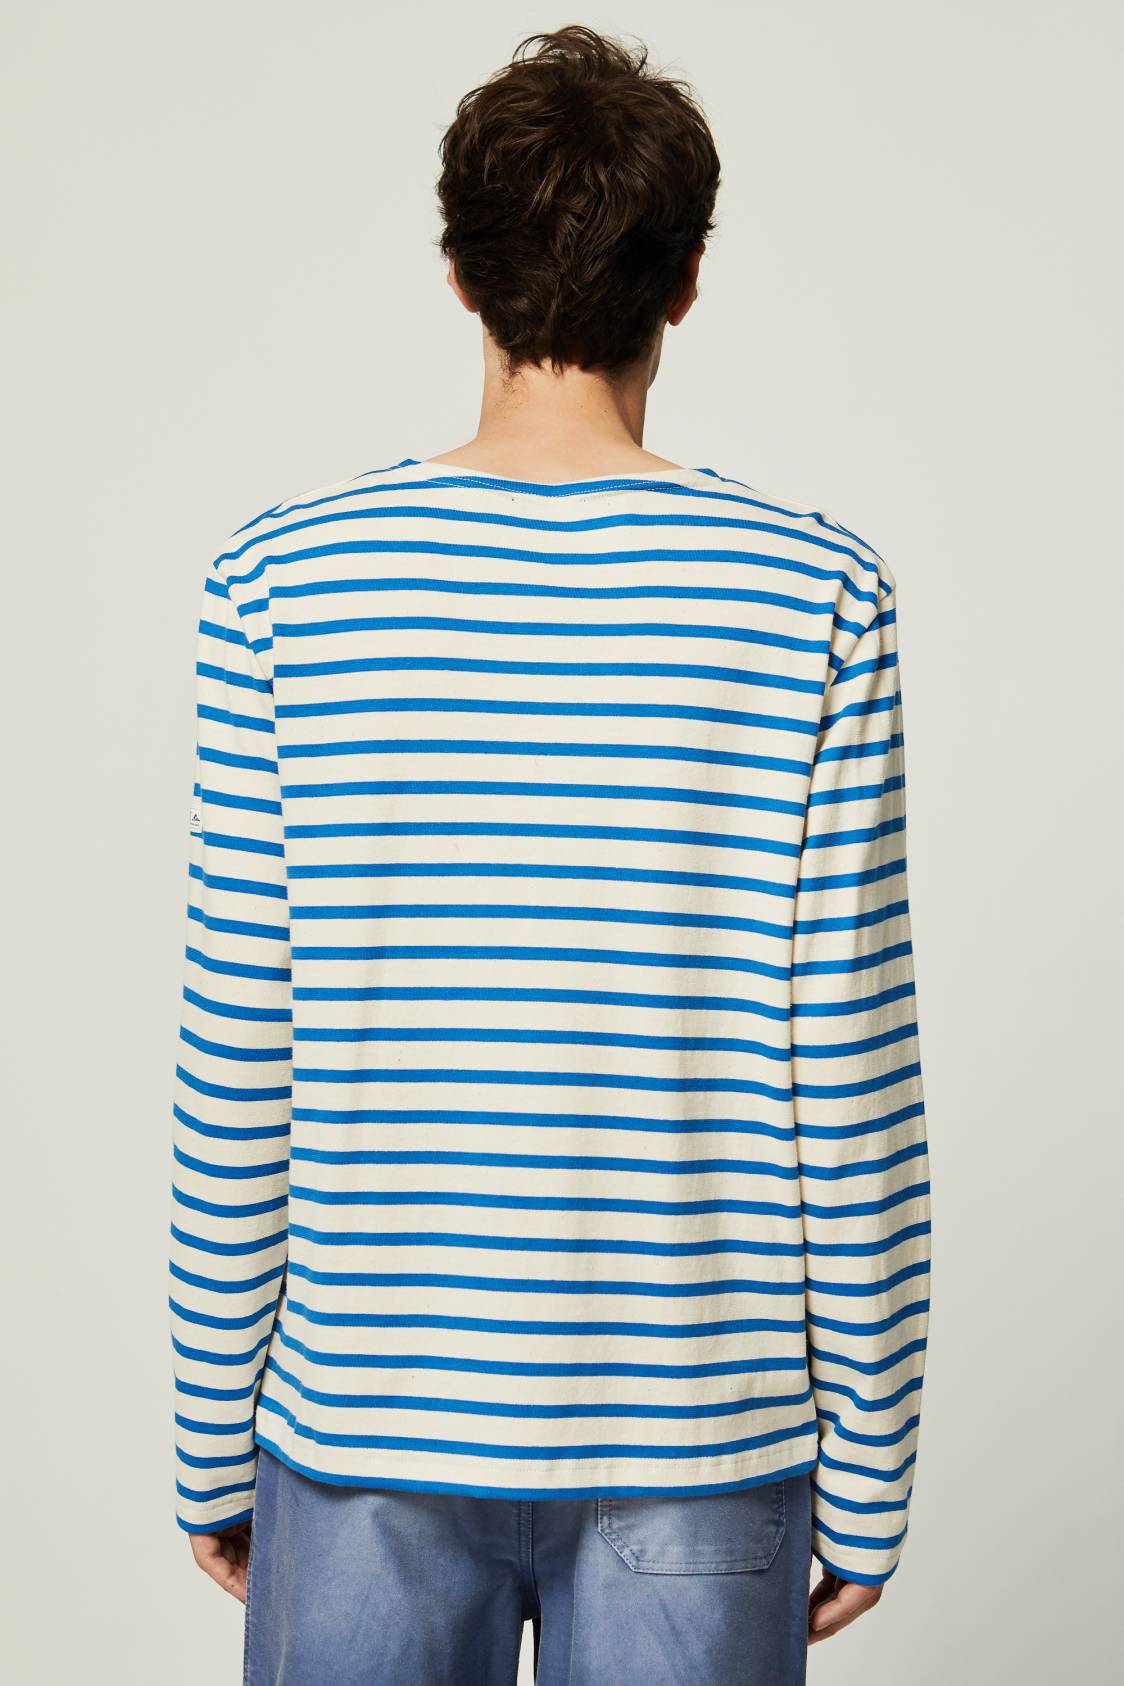 Thurin Breton-Striped T-Shirt - LE MONT SAINT MICHEL